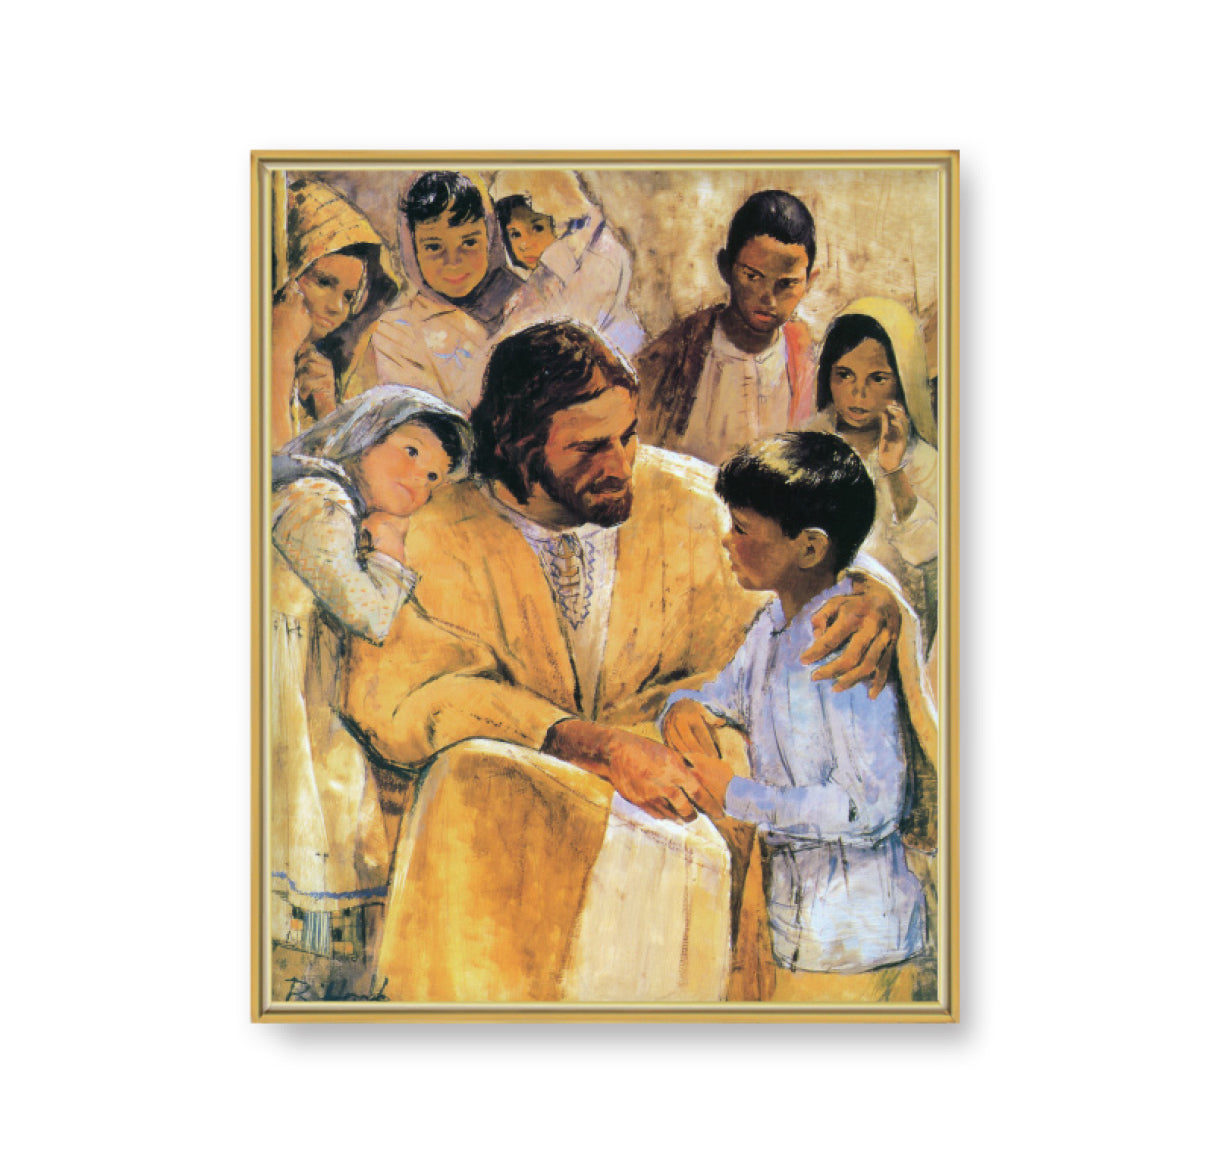 Christ with Children Picture Framed Plaque Large, Gold Plaque Frame